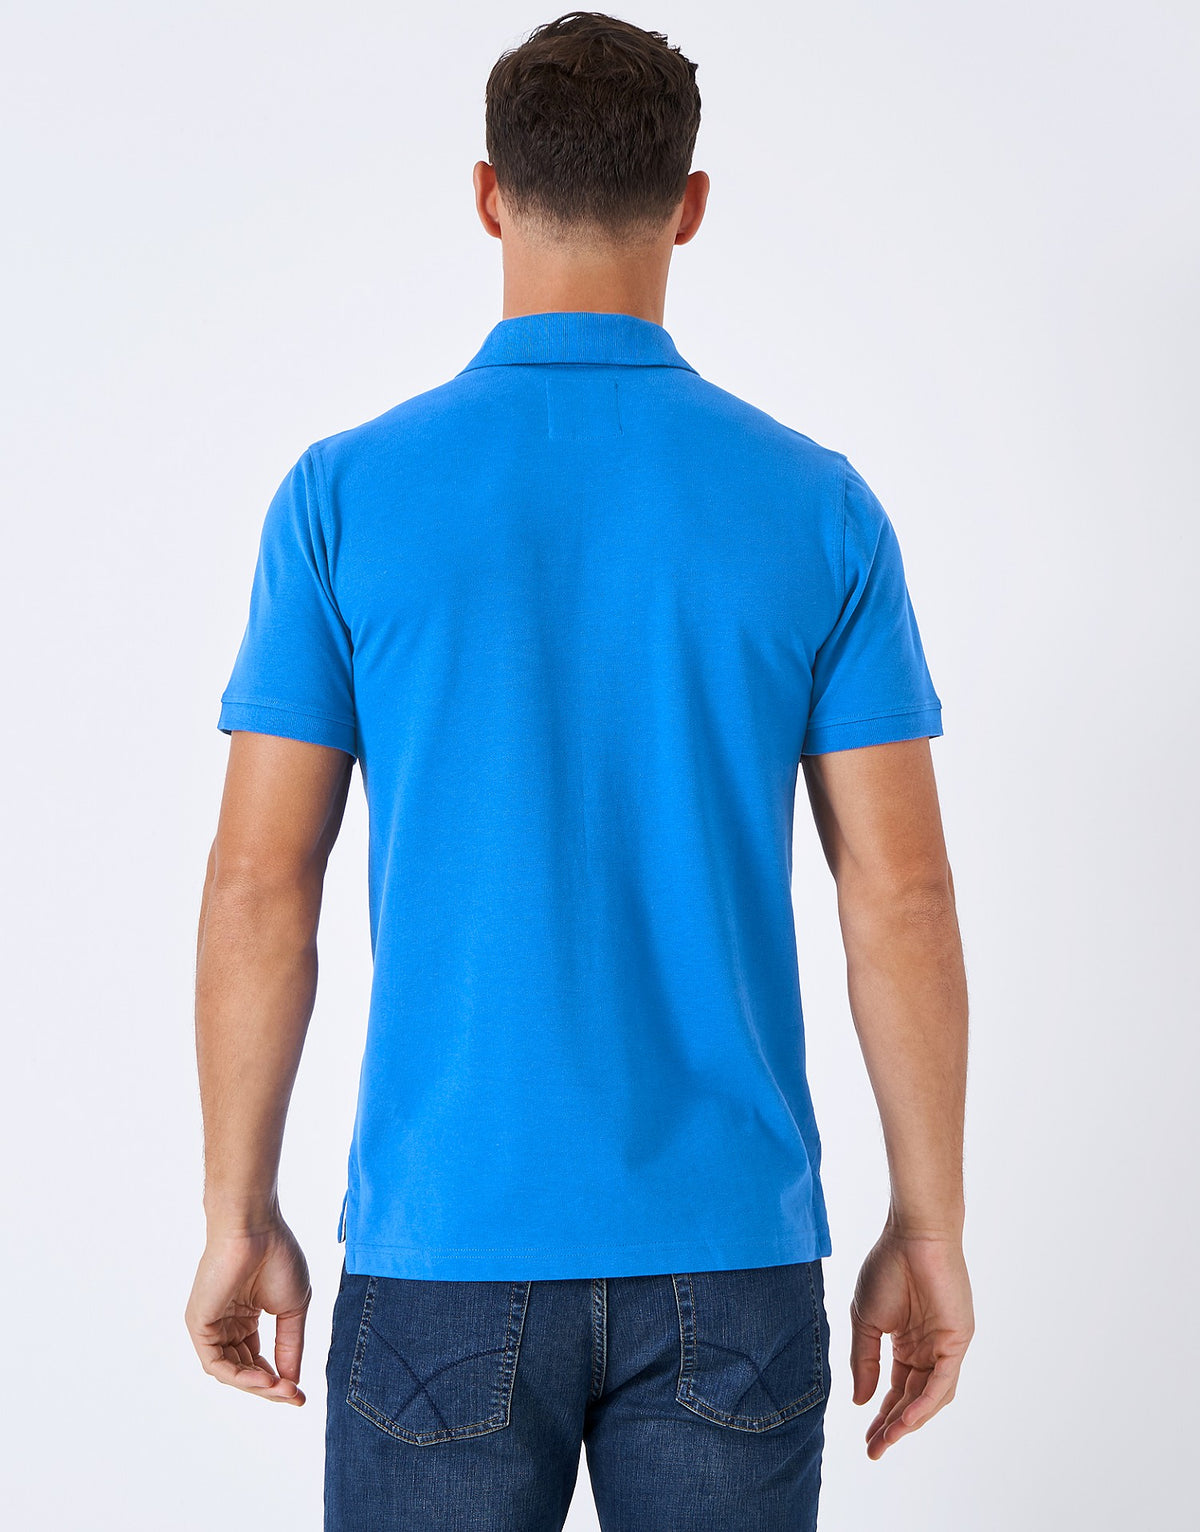 Crew Clothing Mens Pique Polo Shirt 'Classic Pique Polo' - Short Sleeved, 03, Mke002, Victoria Blue